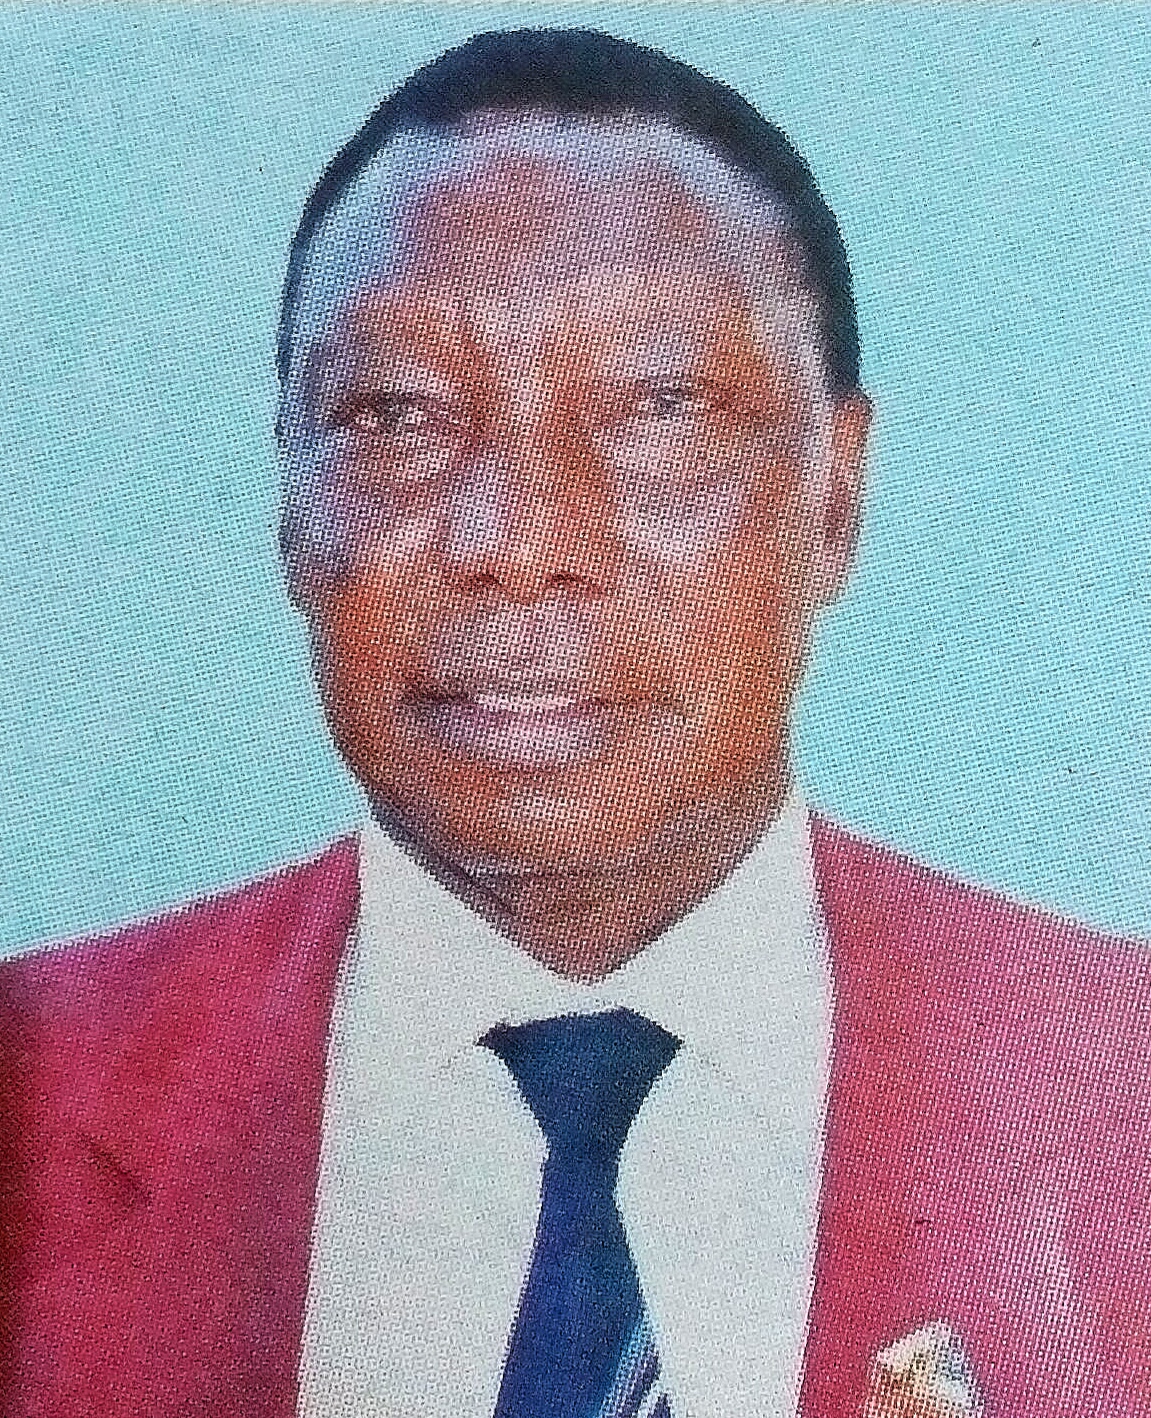 Obituary Image of Simon joshua Ng'ang’a Ngure (Simlon)